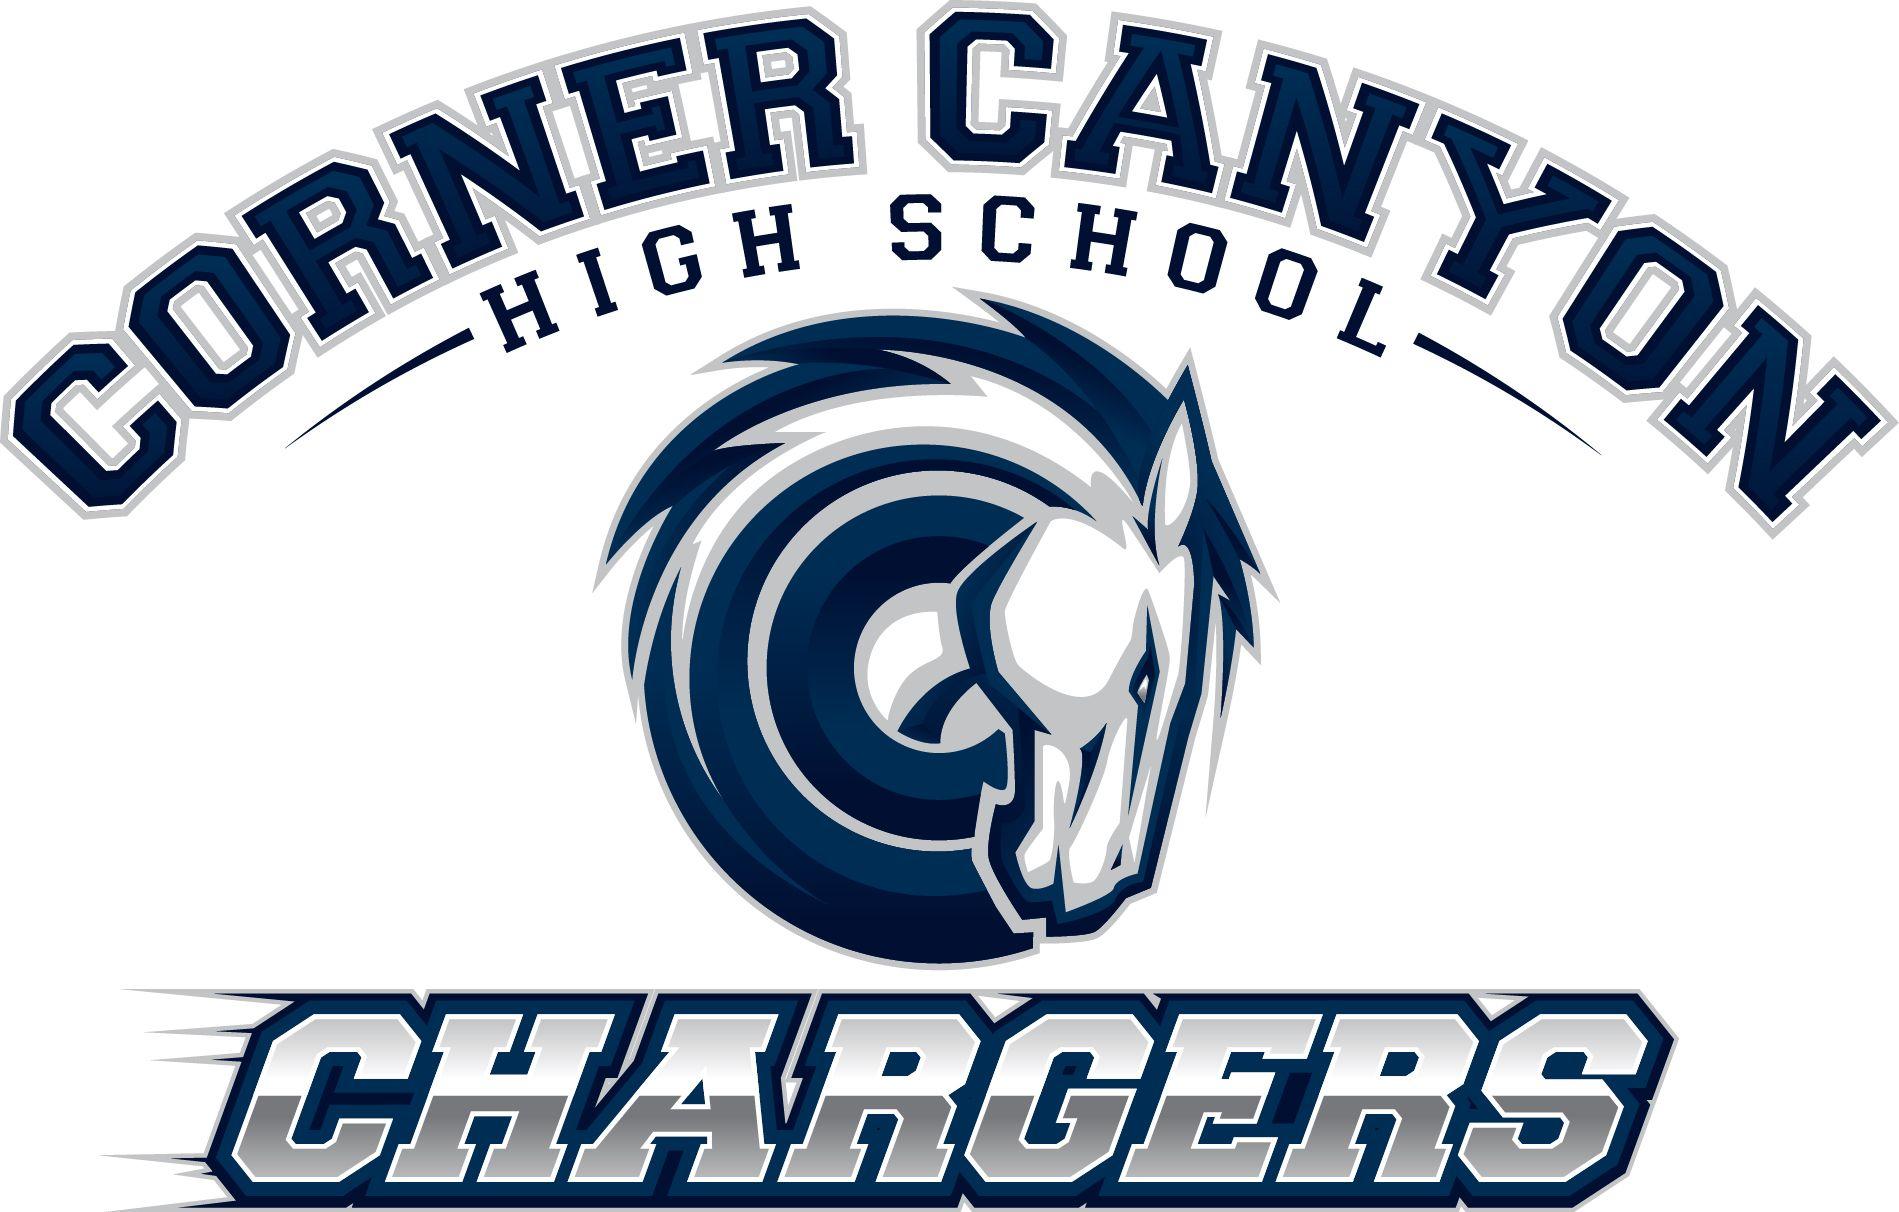 CCHS Logo - Corner Canyon High